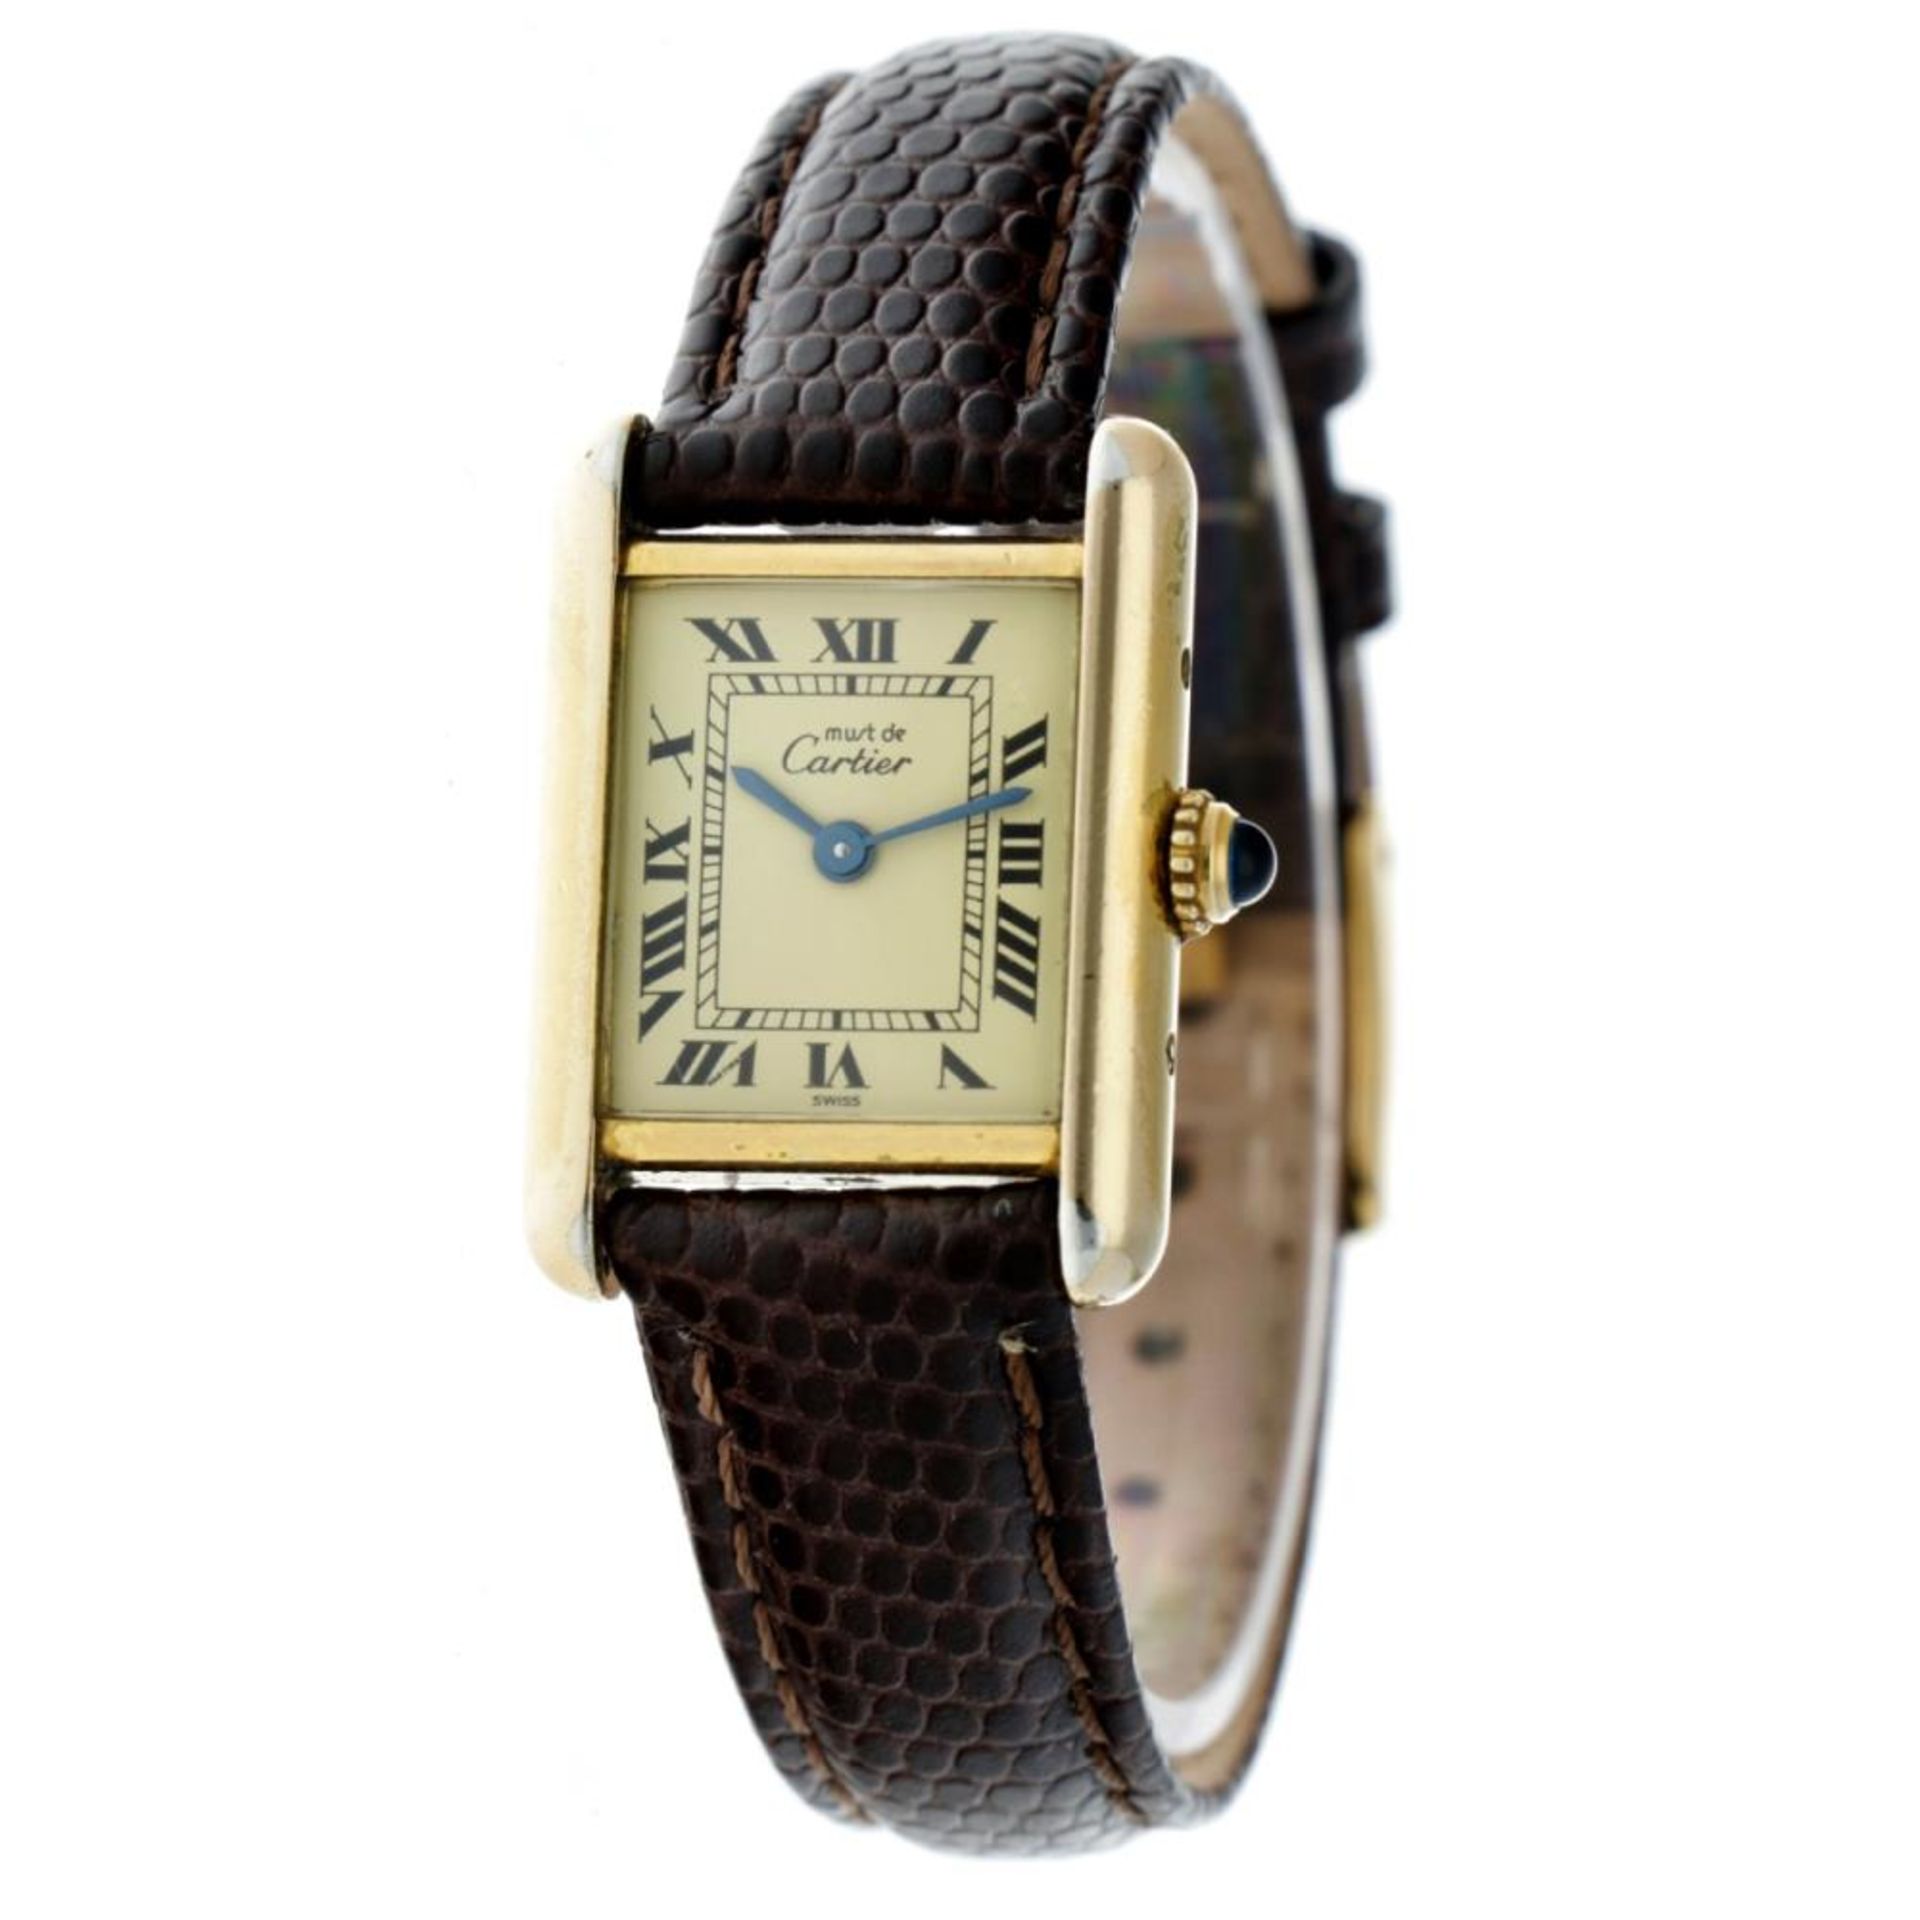 Cartier Tank Vermeil 5057001 - Ladies watch - approx. 1990. - Image 4 of 10